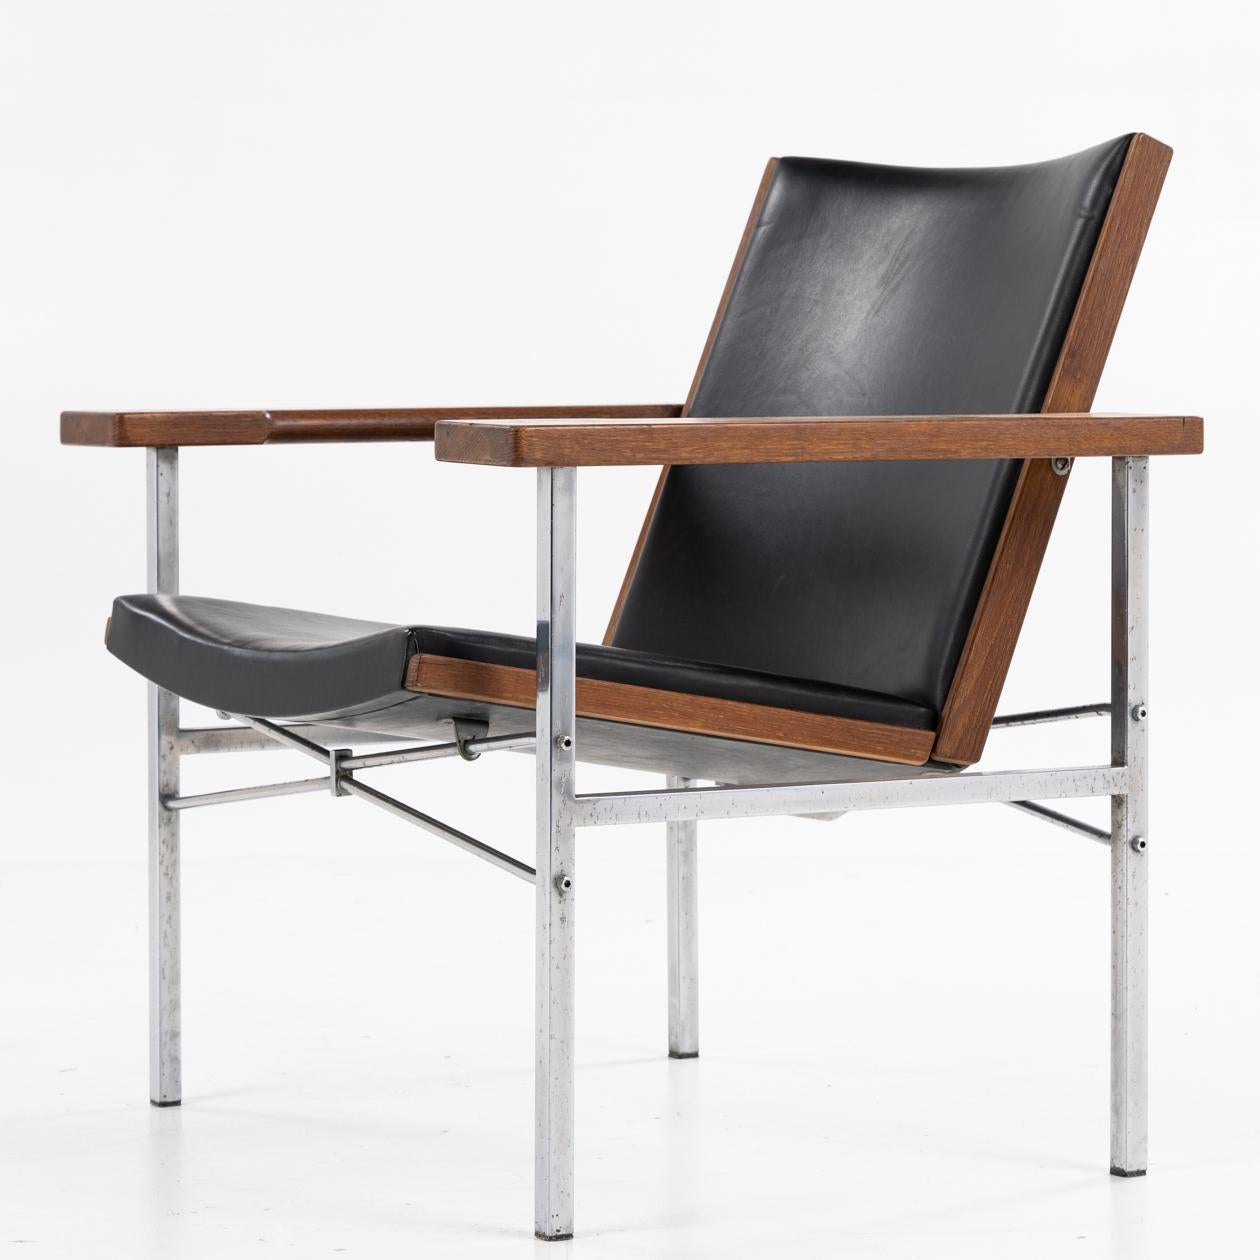 Pair of JH 703 easy chairs by Hans J. Wegner / Johannes Hansen.